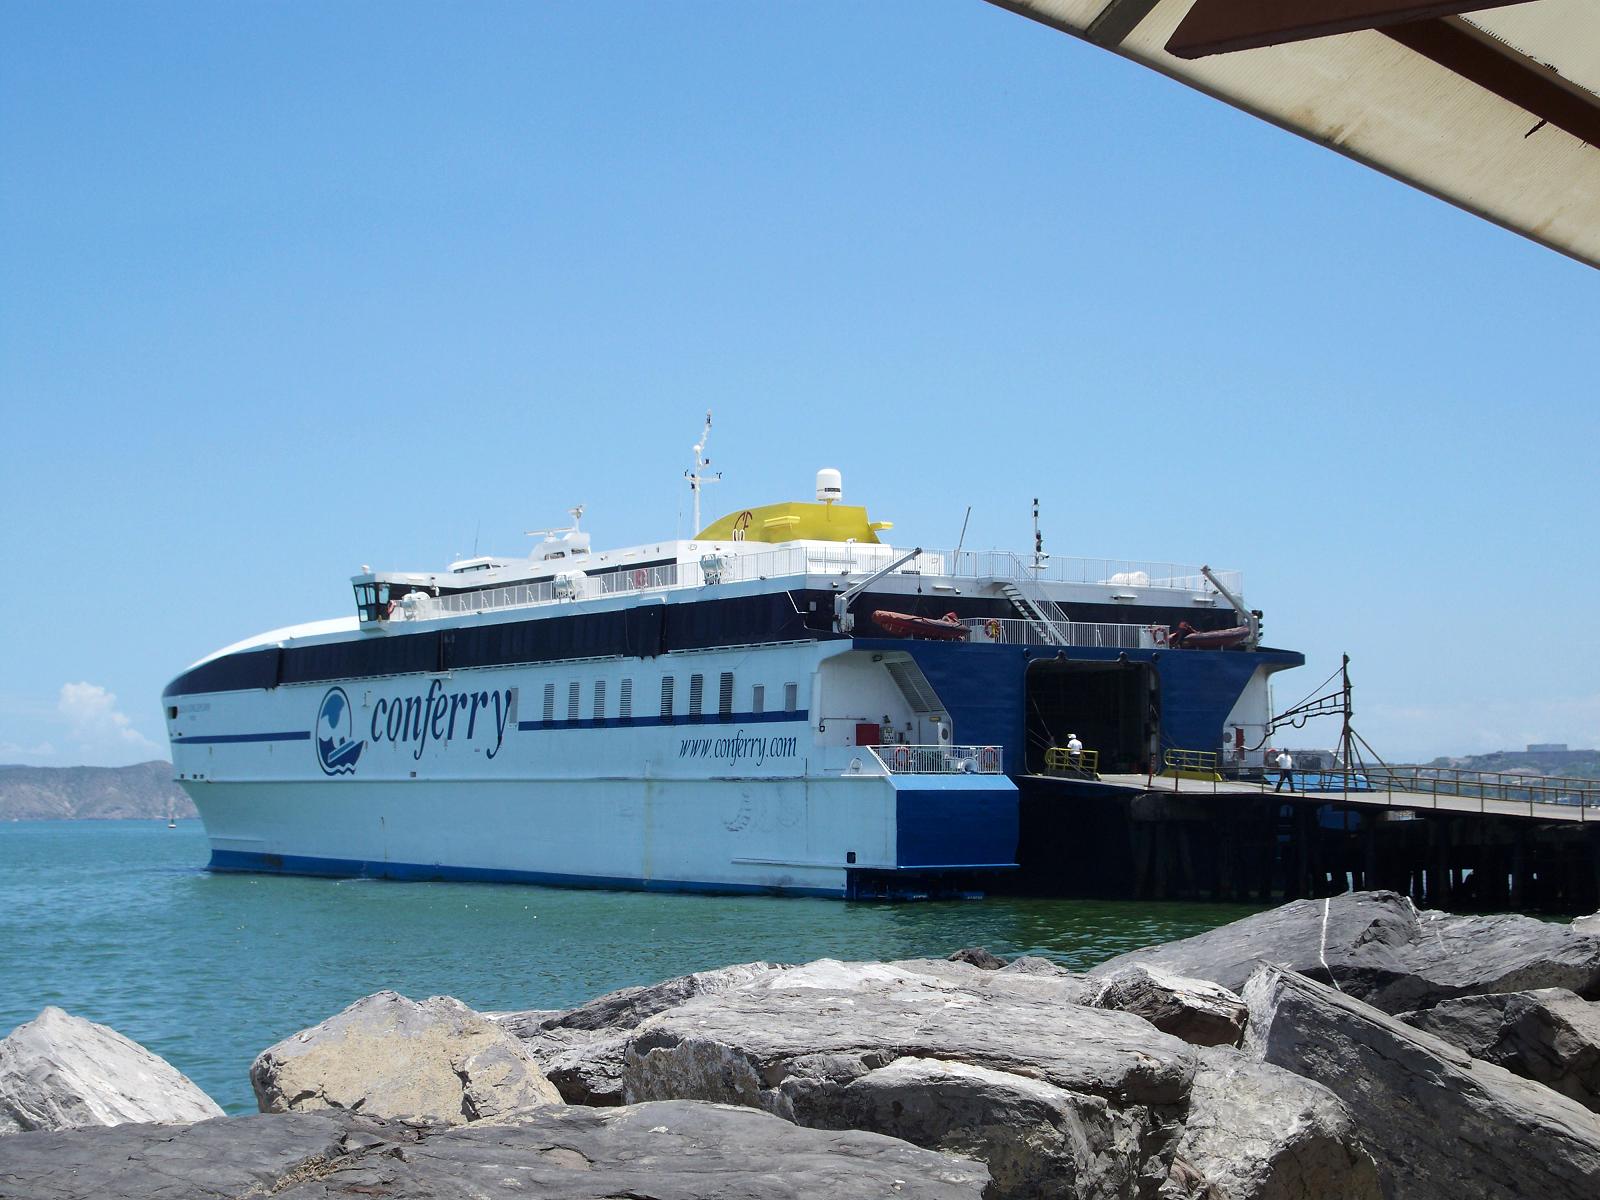 Sundde aseguró desconocer aumento de tarifas en ferrys